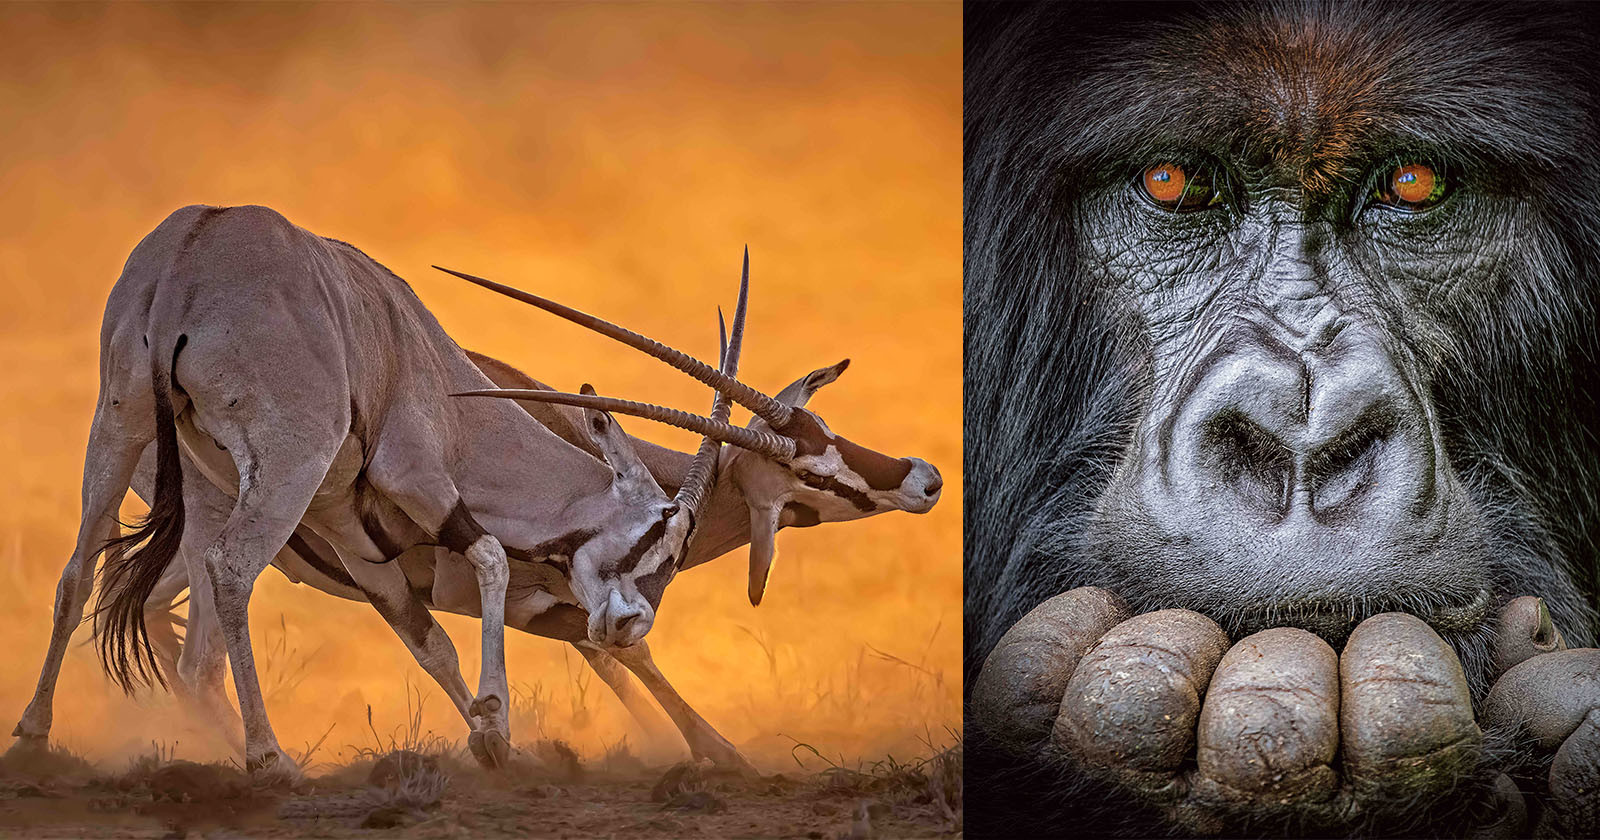  photo pensive gorilla wins african wildlife photography awards 